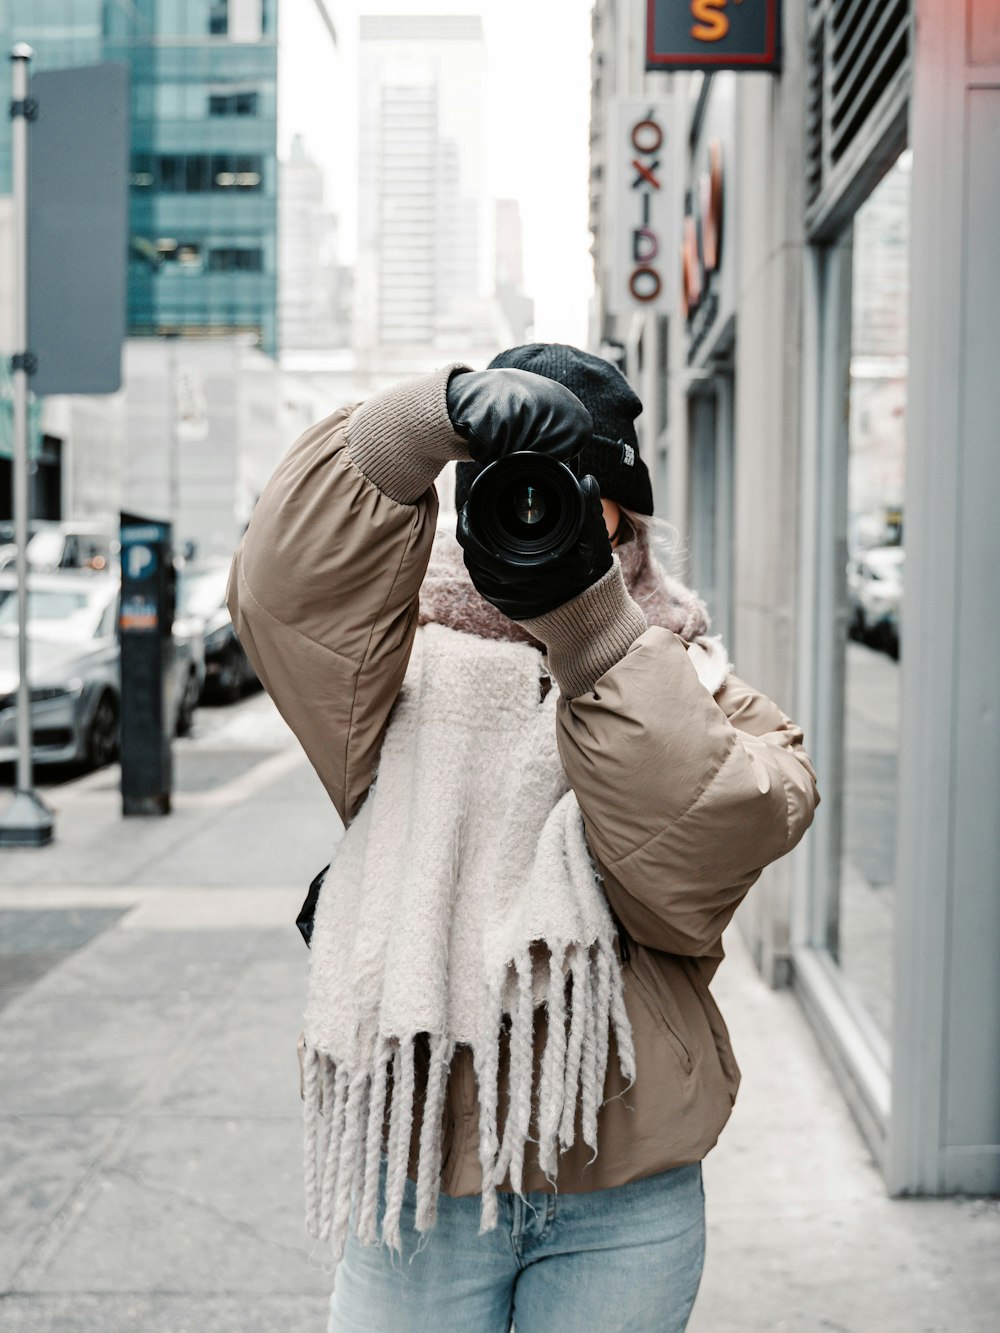 person in brown coat holding black dslr camera